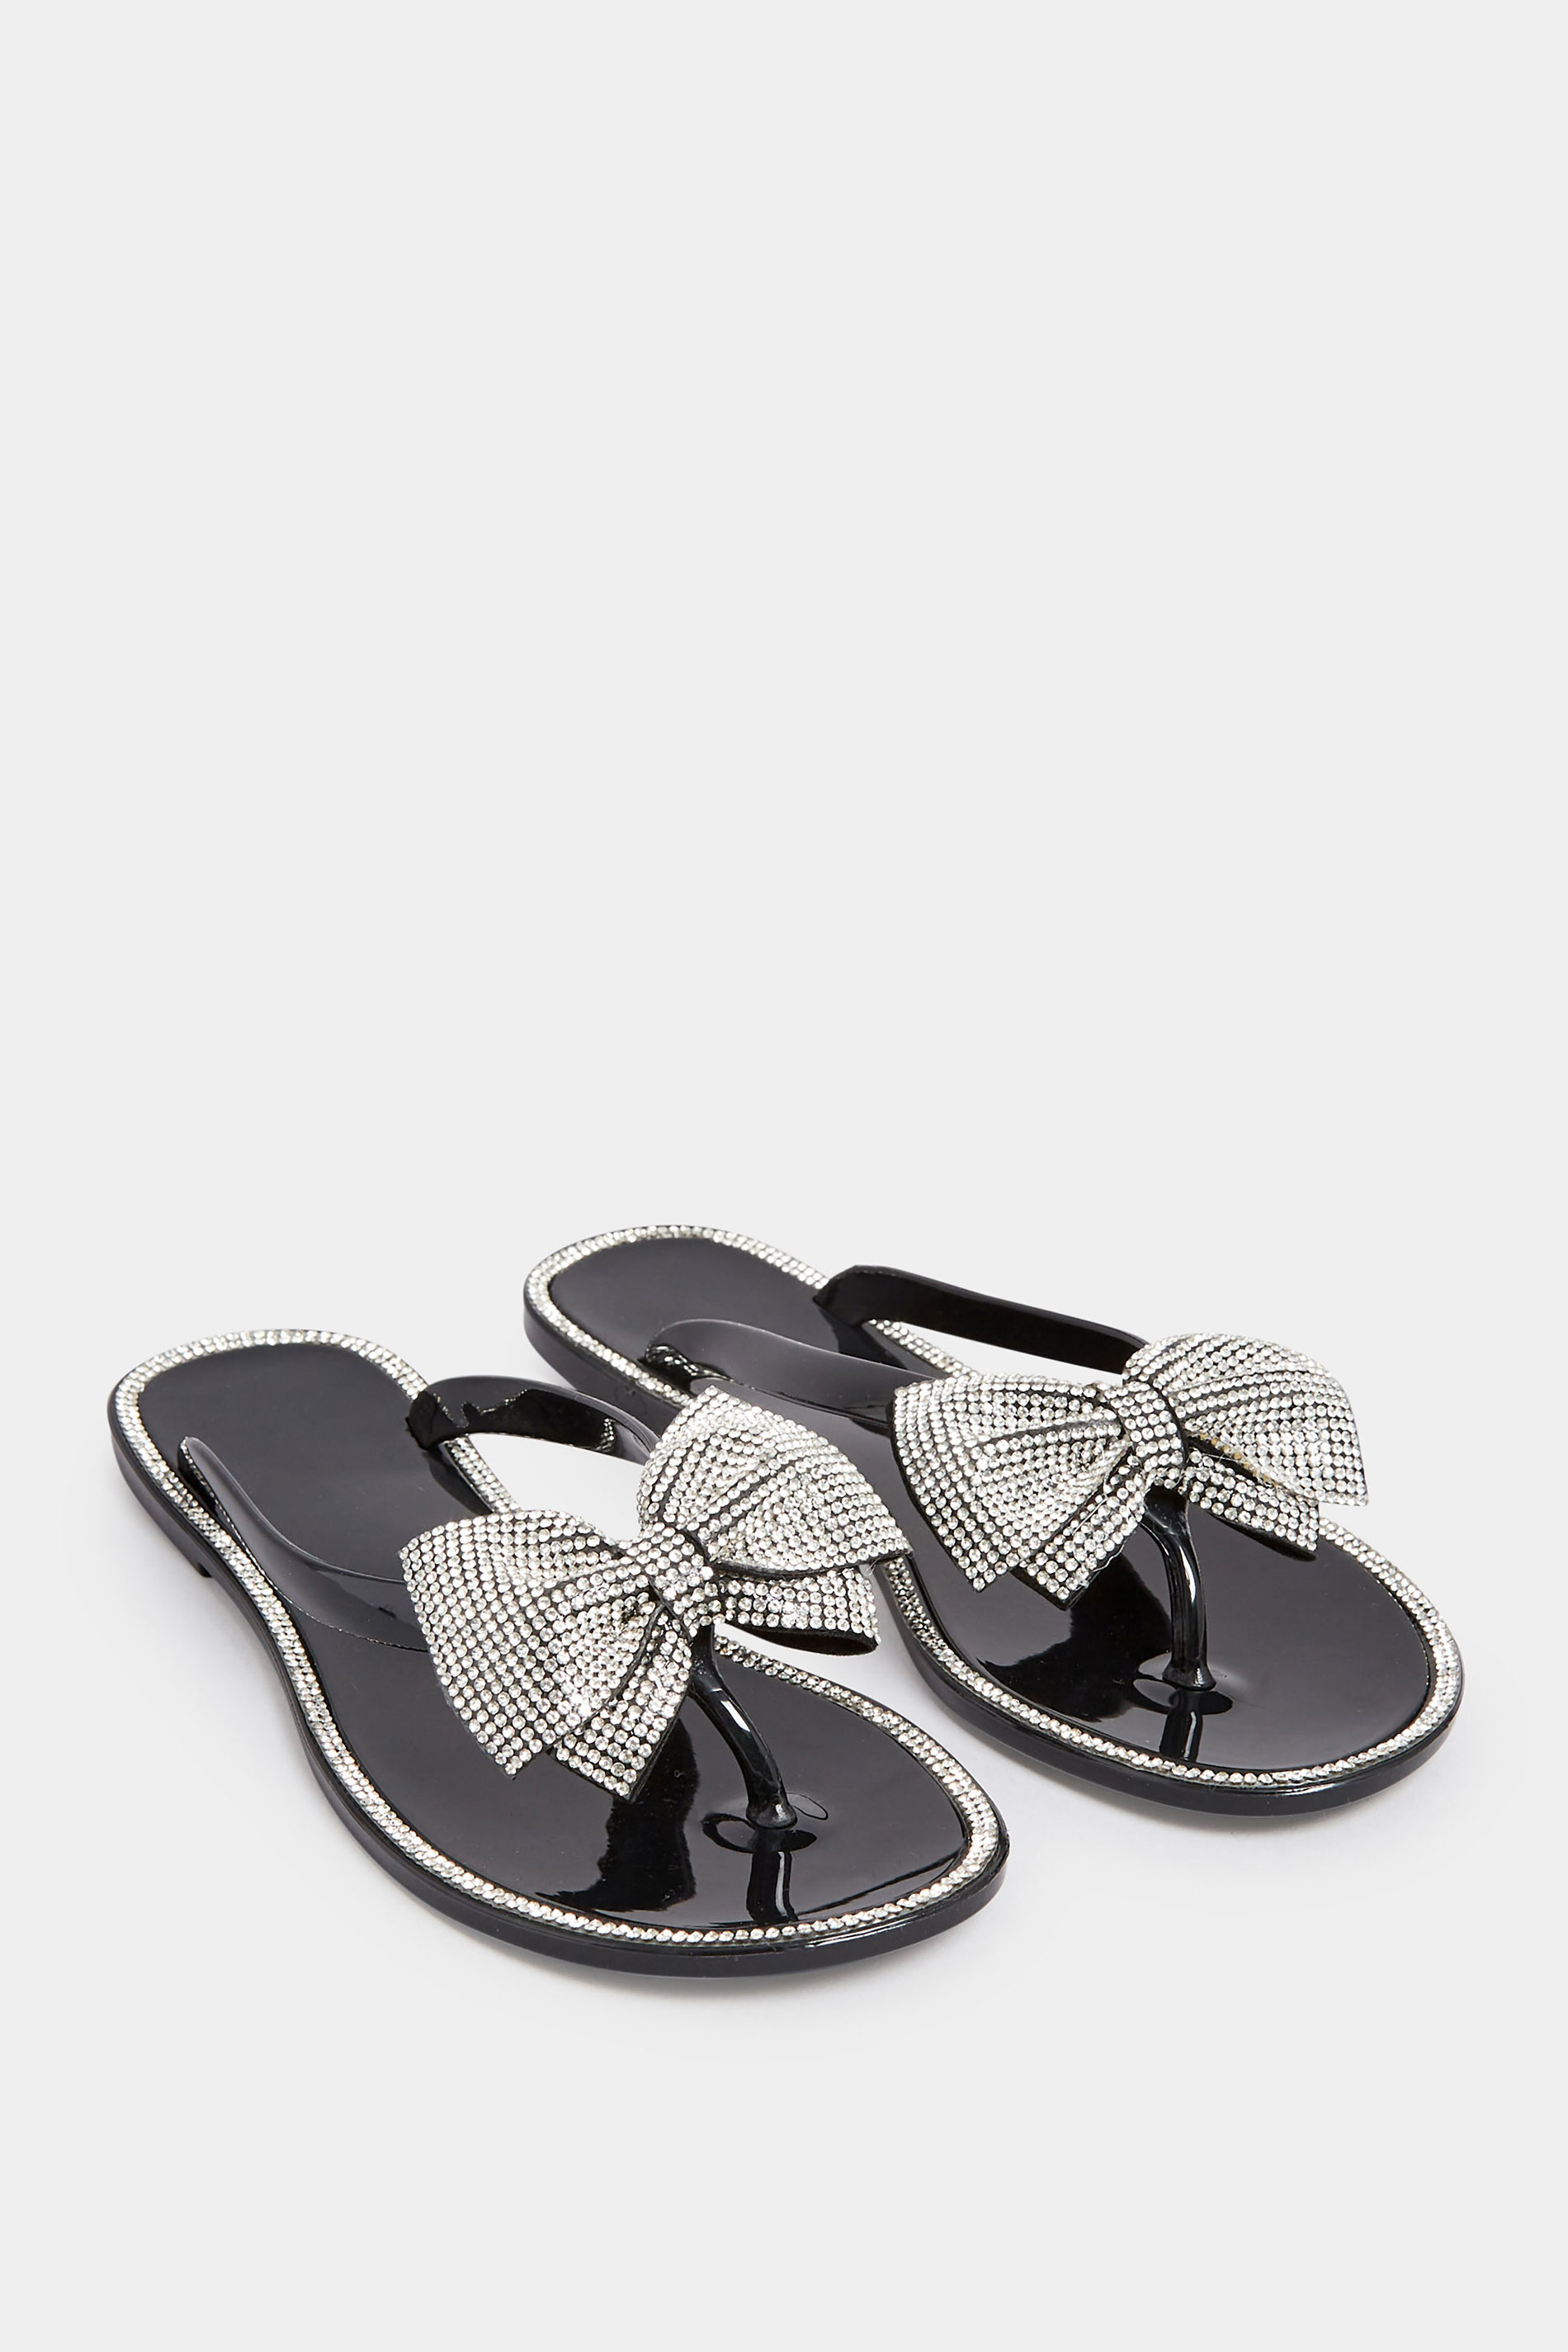 PixieGirl Black Diamante Bow Jelly Sandals In Standard Fit  | PixieGirl 2